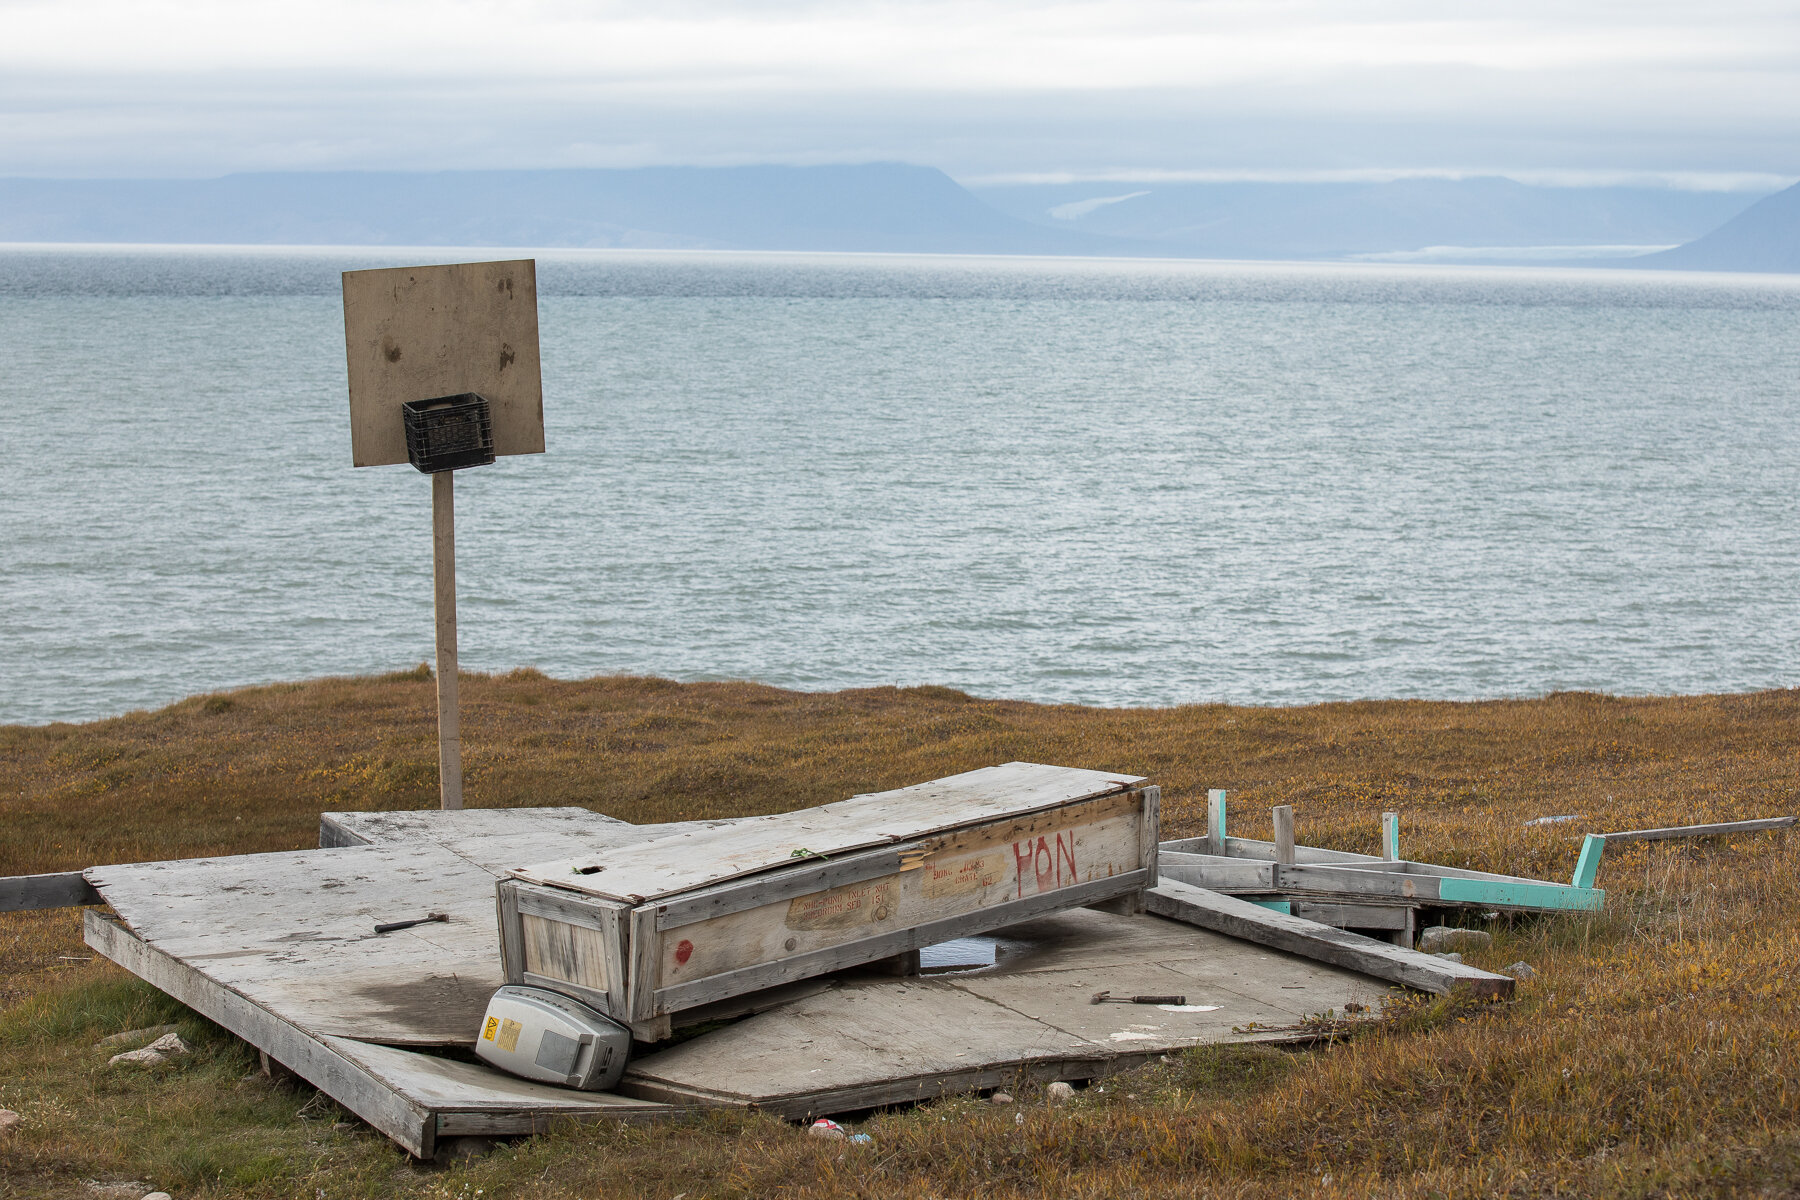  Pond Inlet, Canadian High Arctic - A true “basket” ball court 